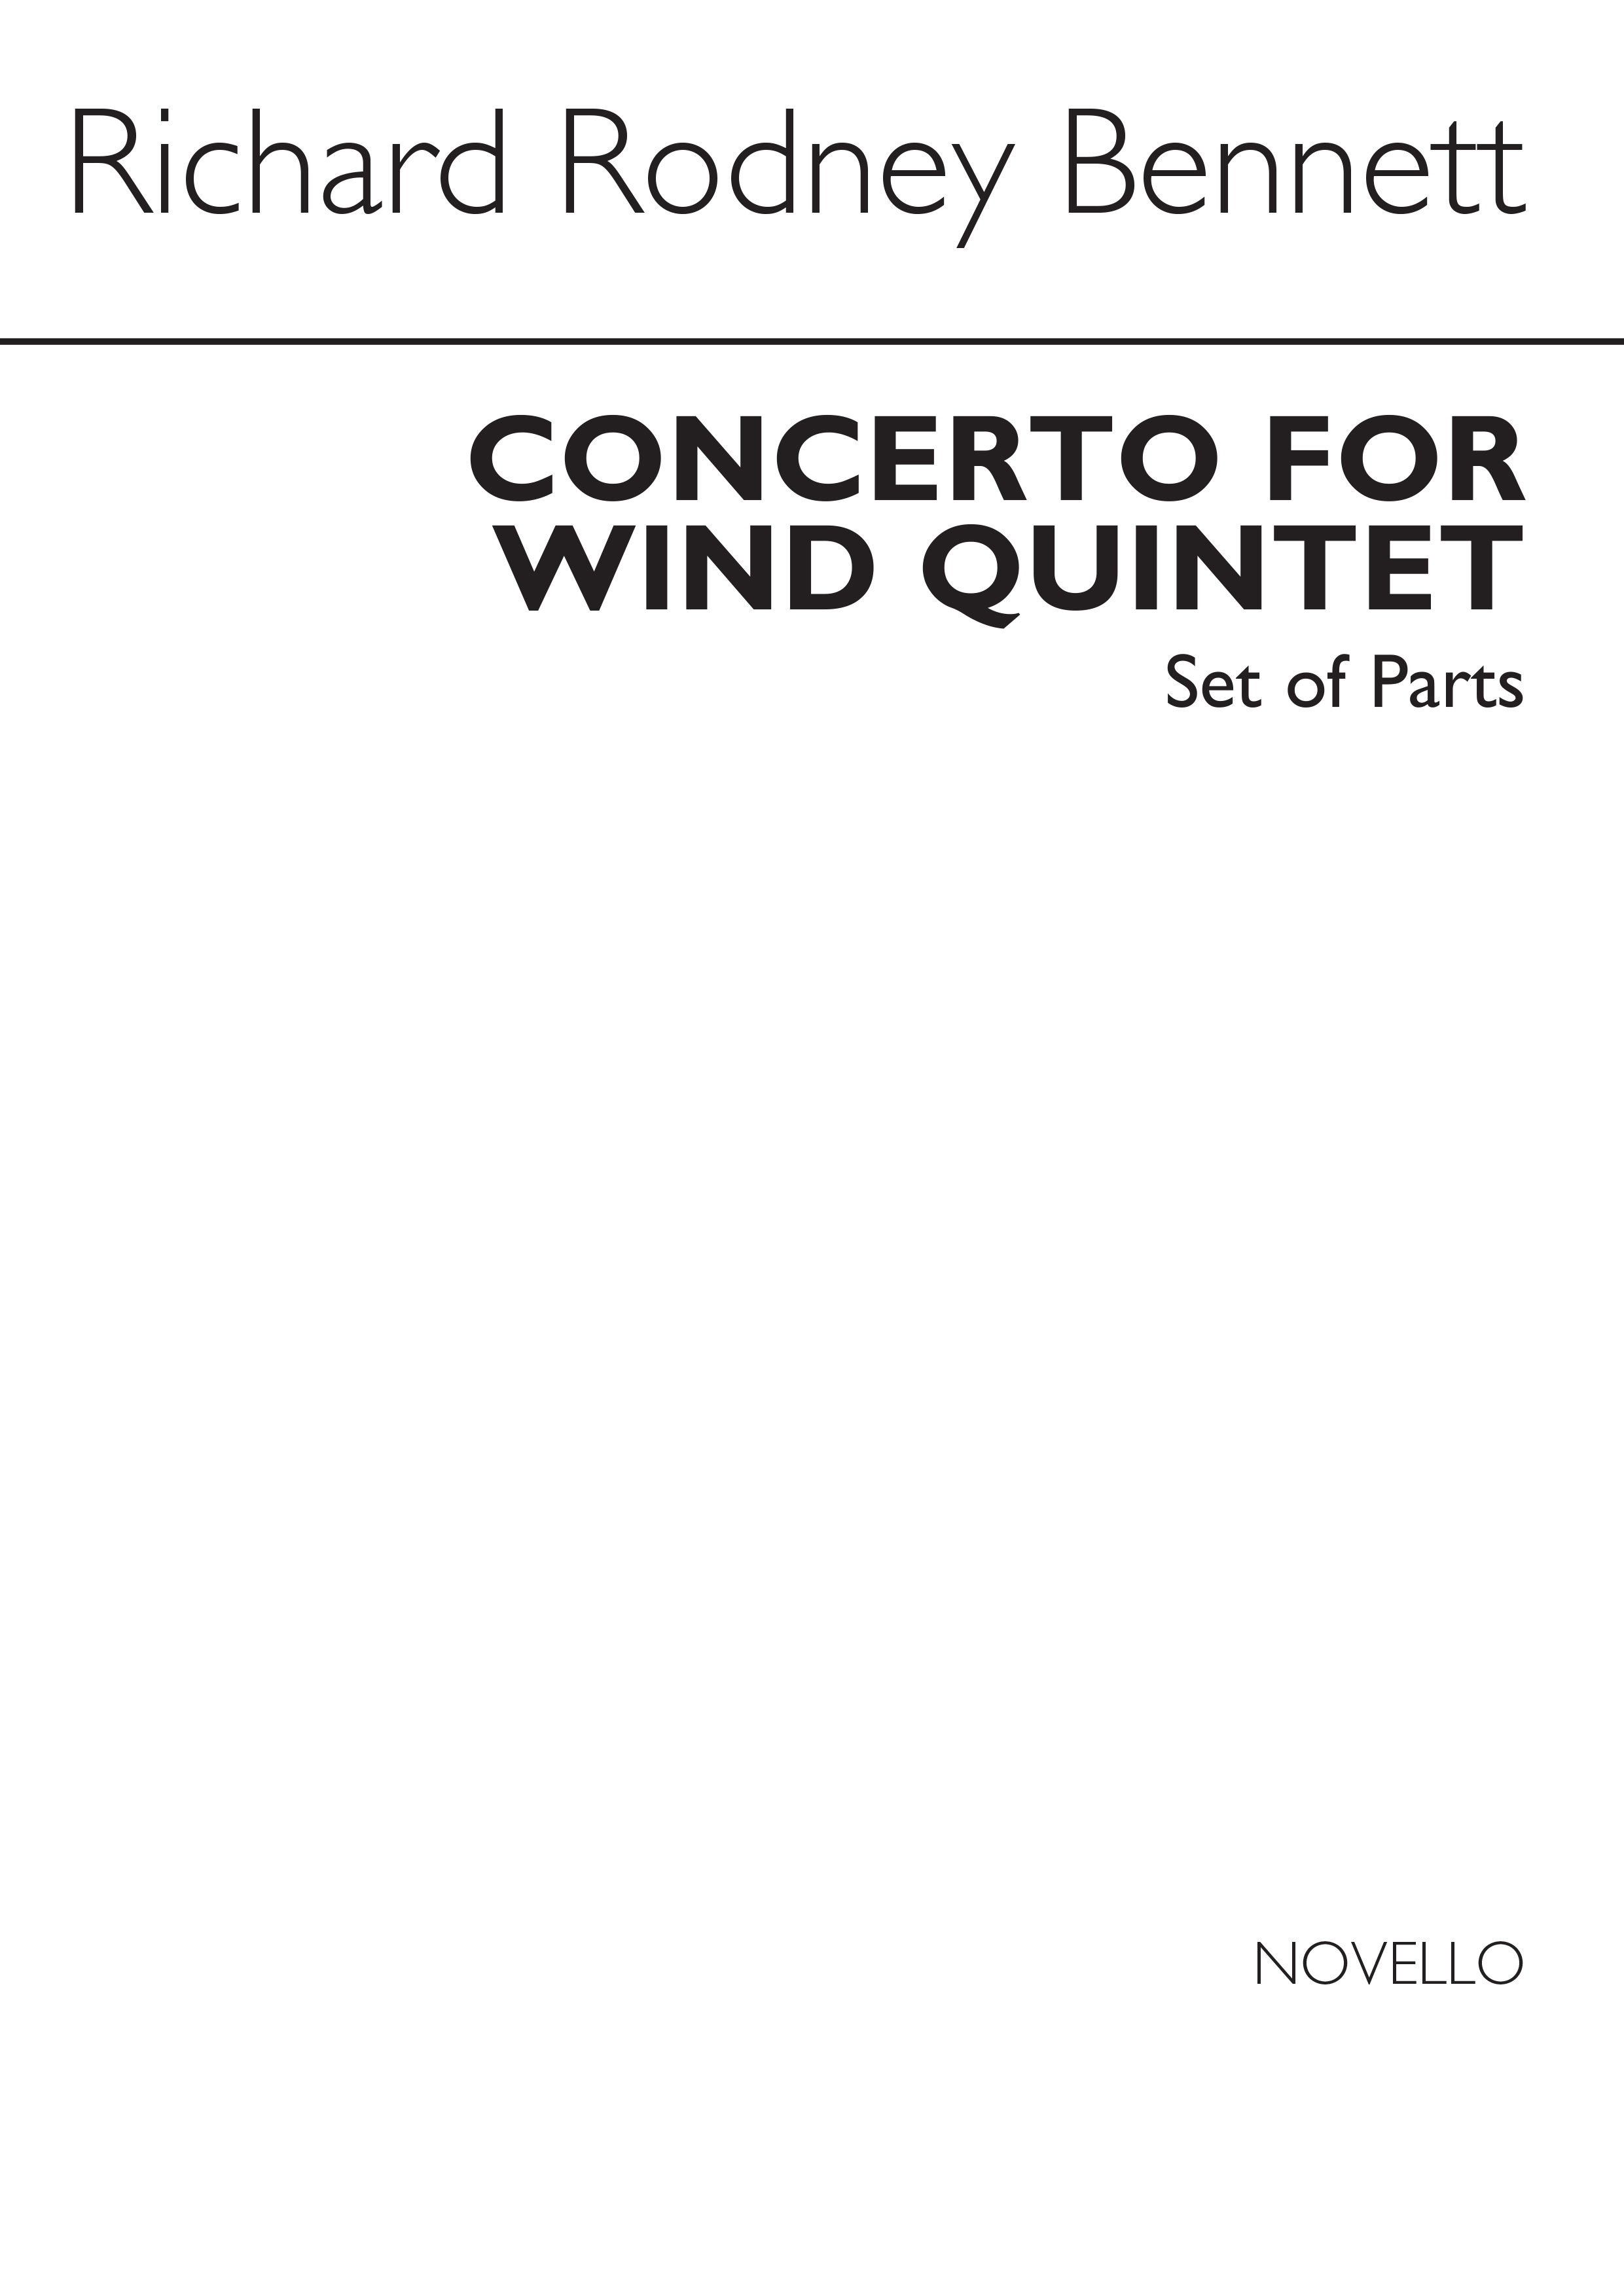 RR Bennett: Concerto For Wind Quintet (Parts)